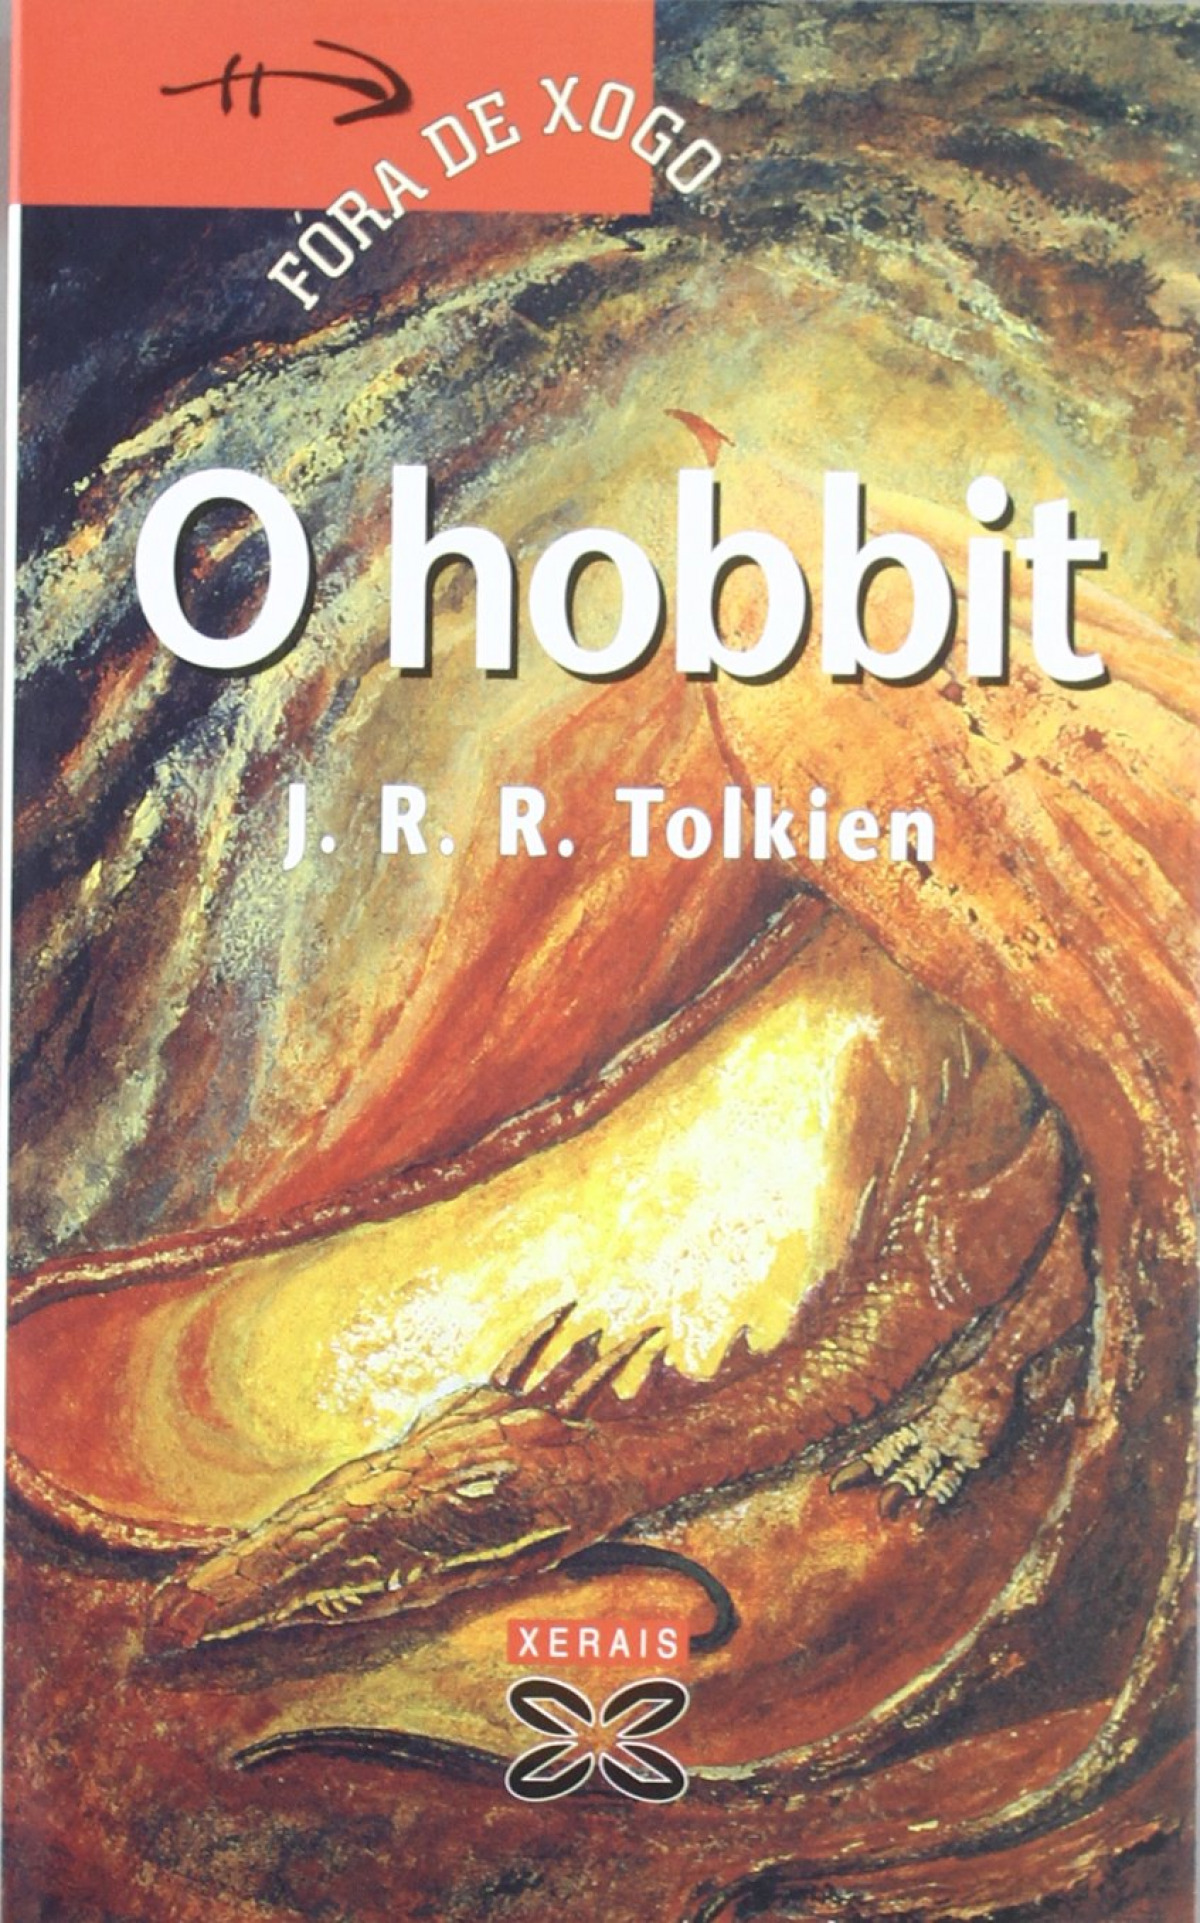 O hobbit - Tolkien, J. R. R.